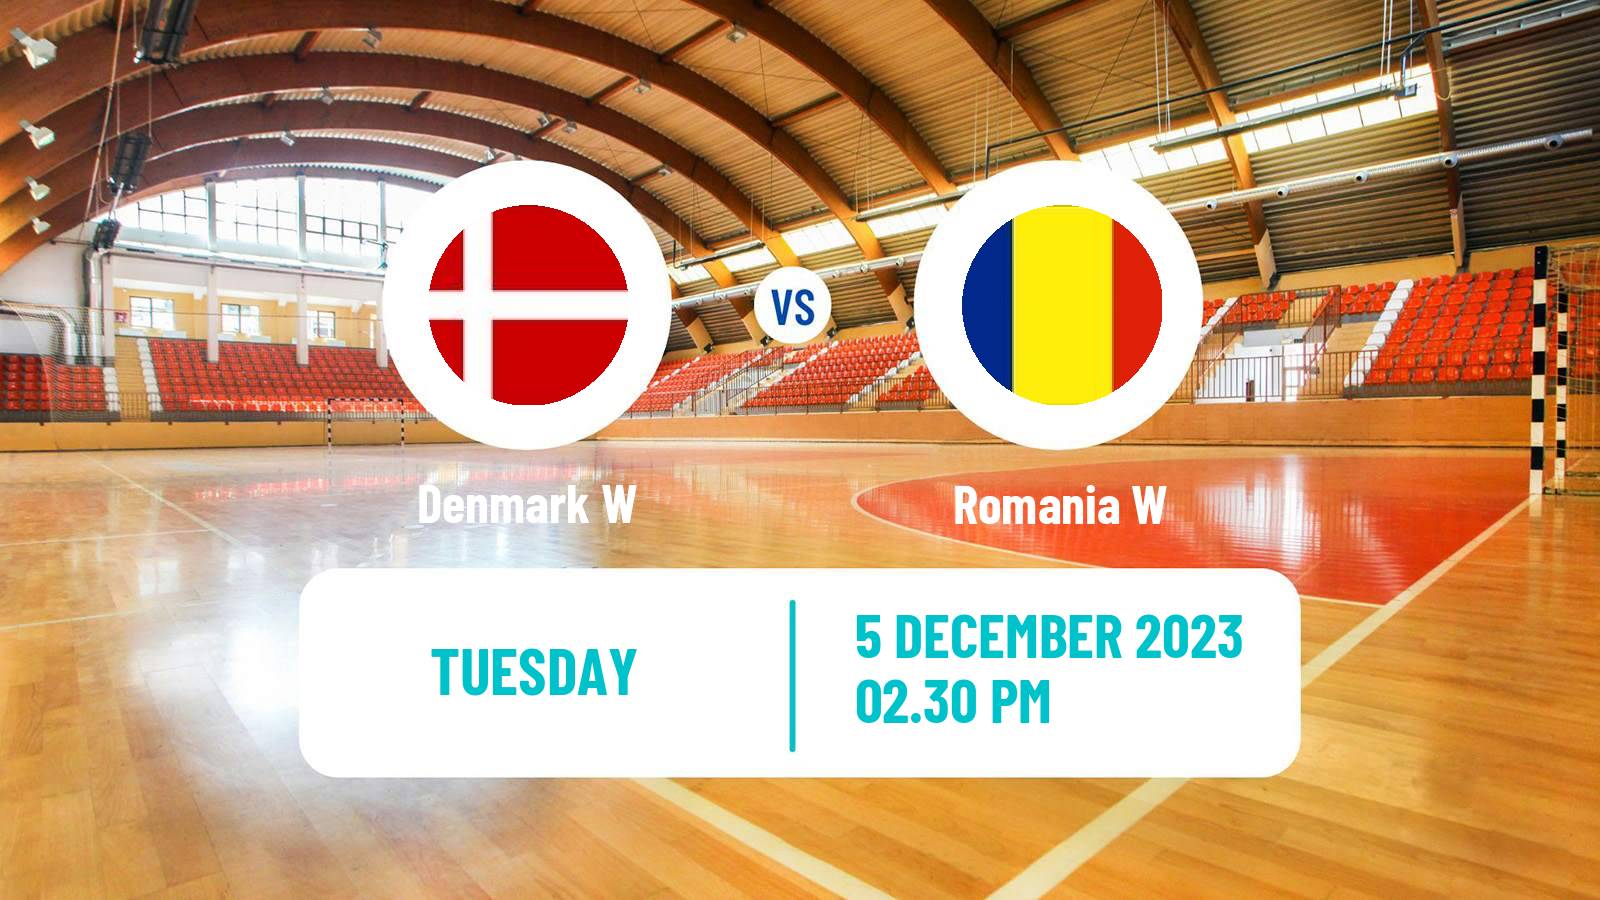 Handball Handball World Championship Women Denmark W - Romania W